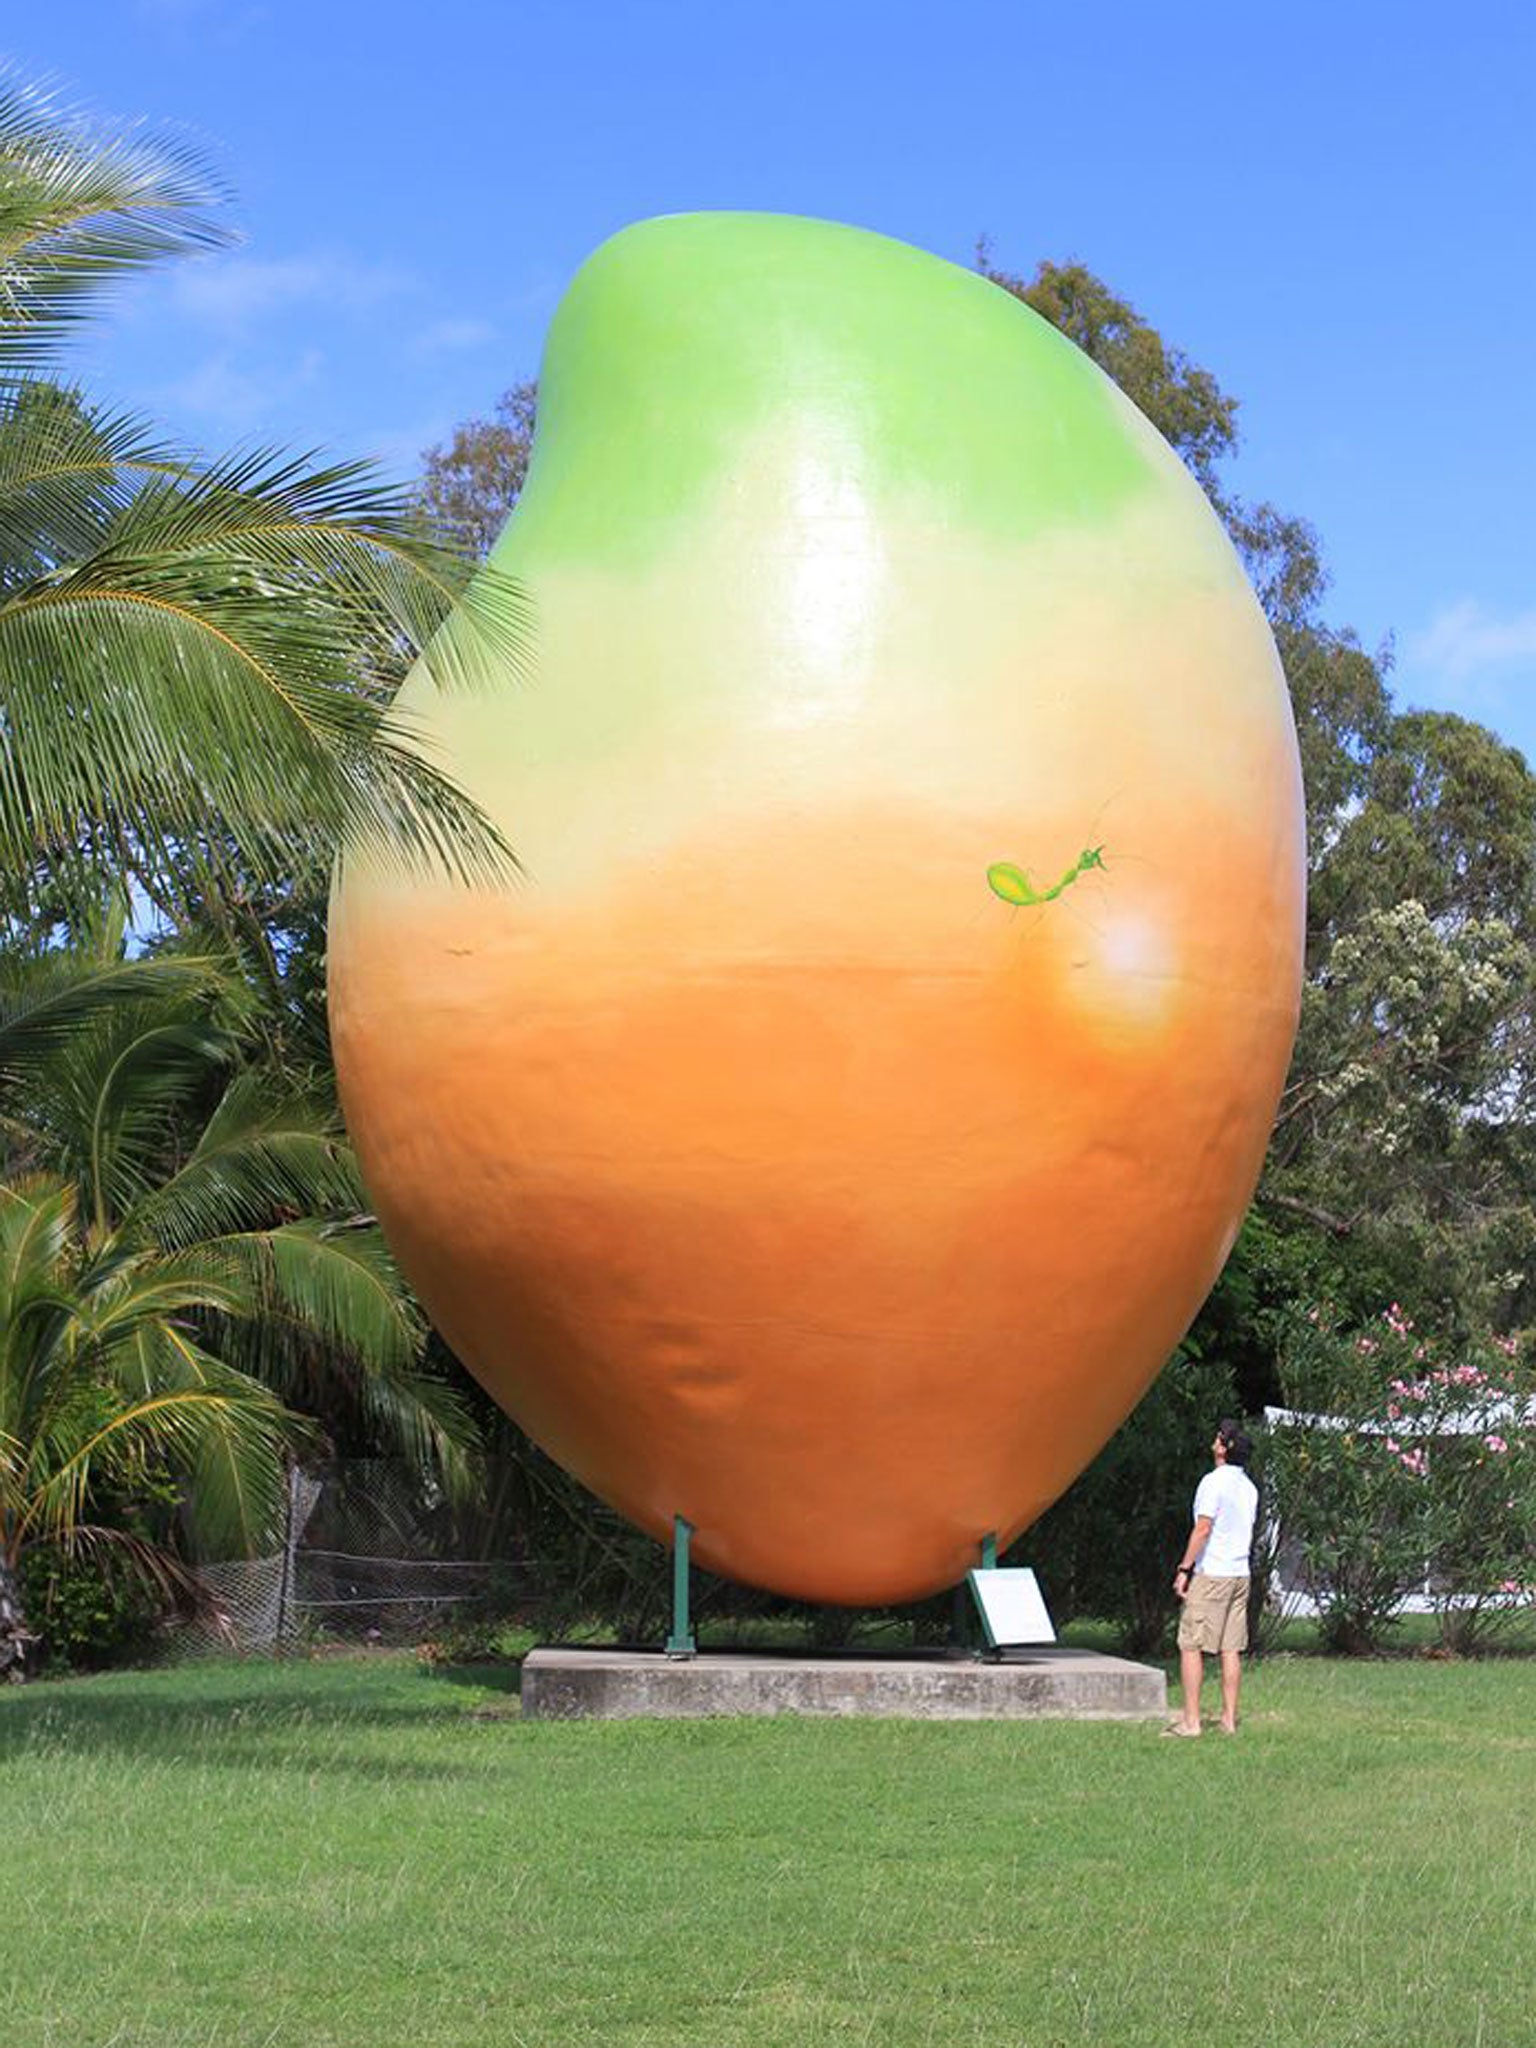 Astounding big mangos on camera